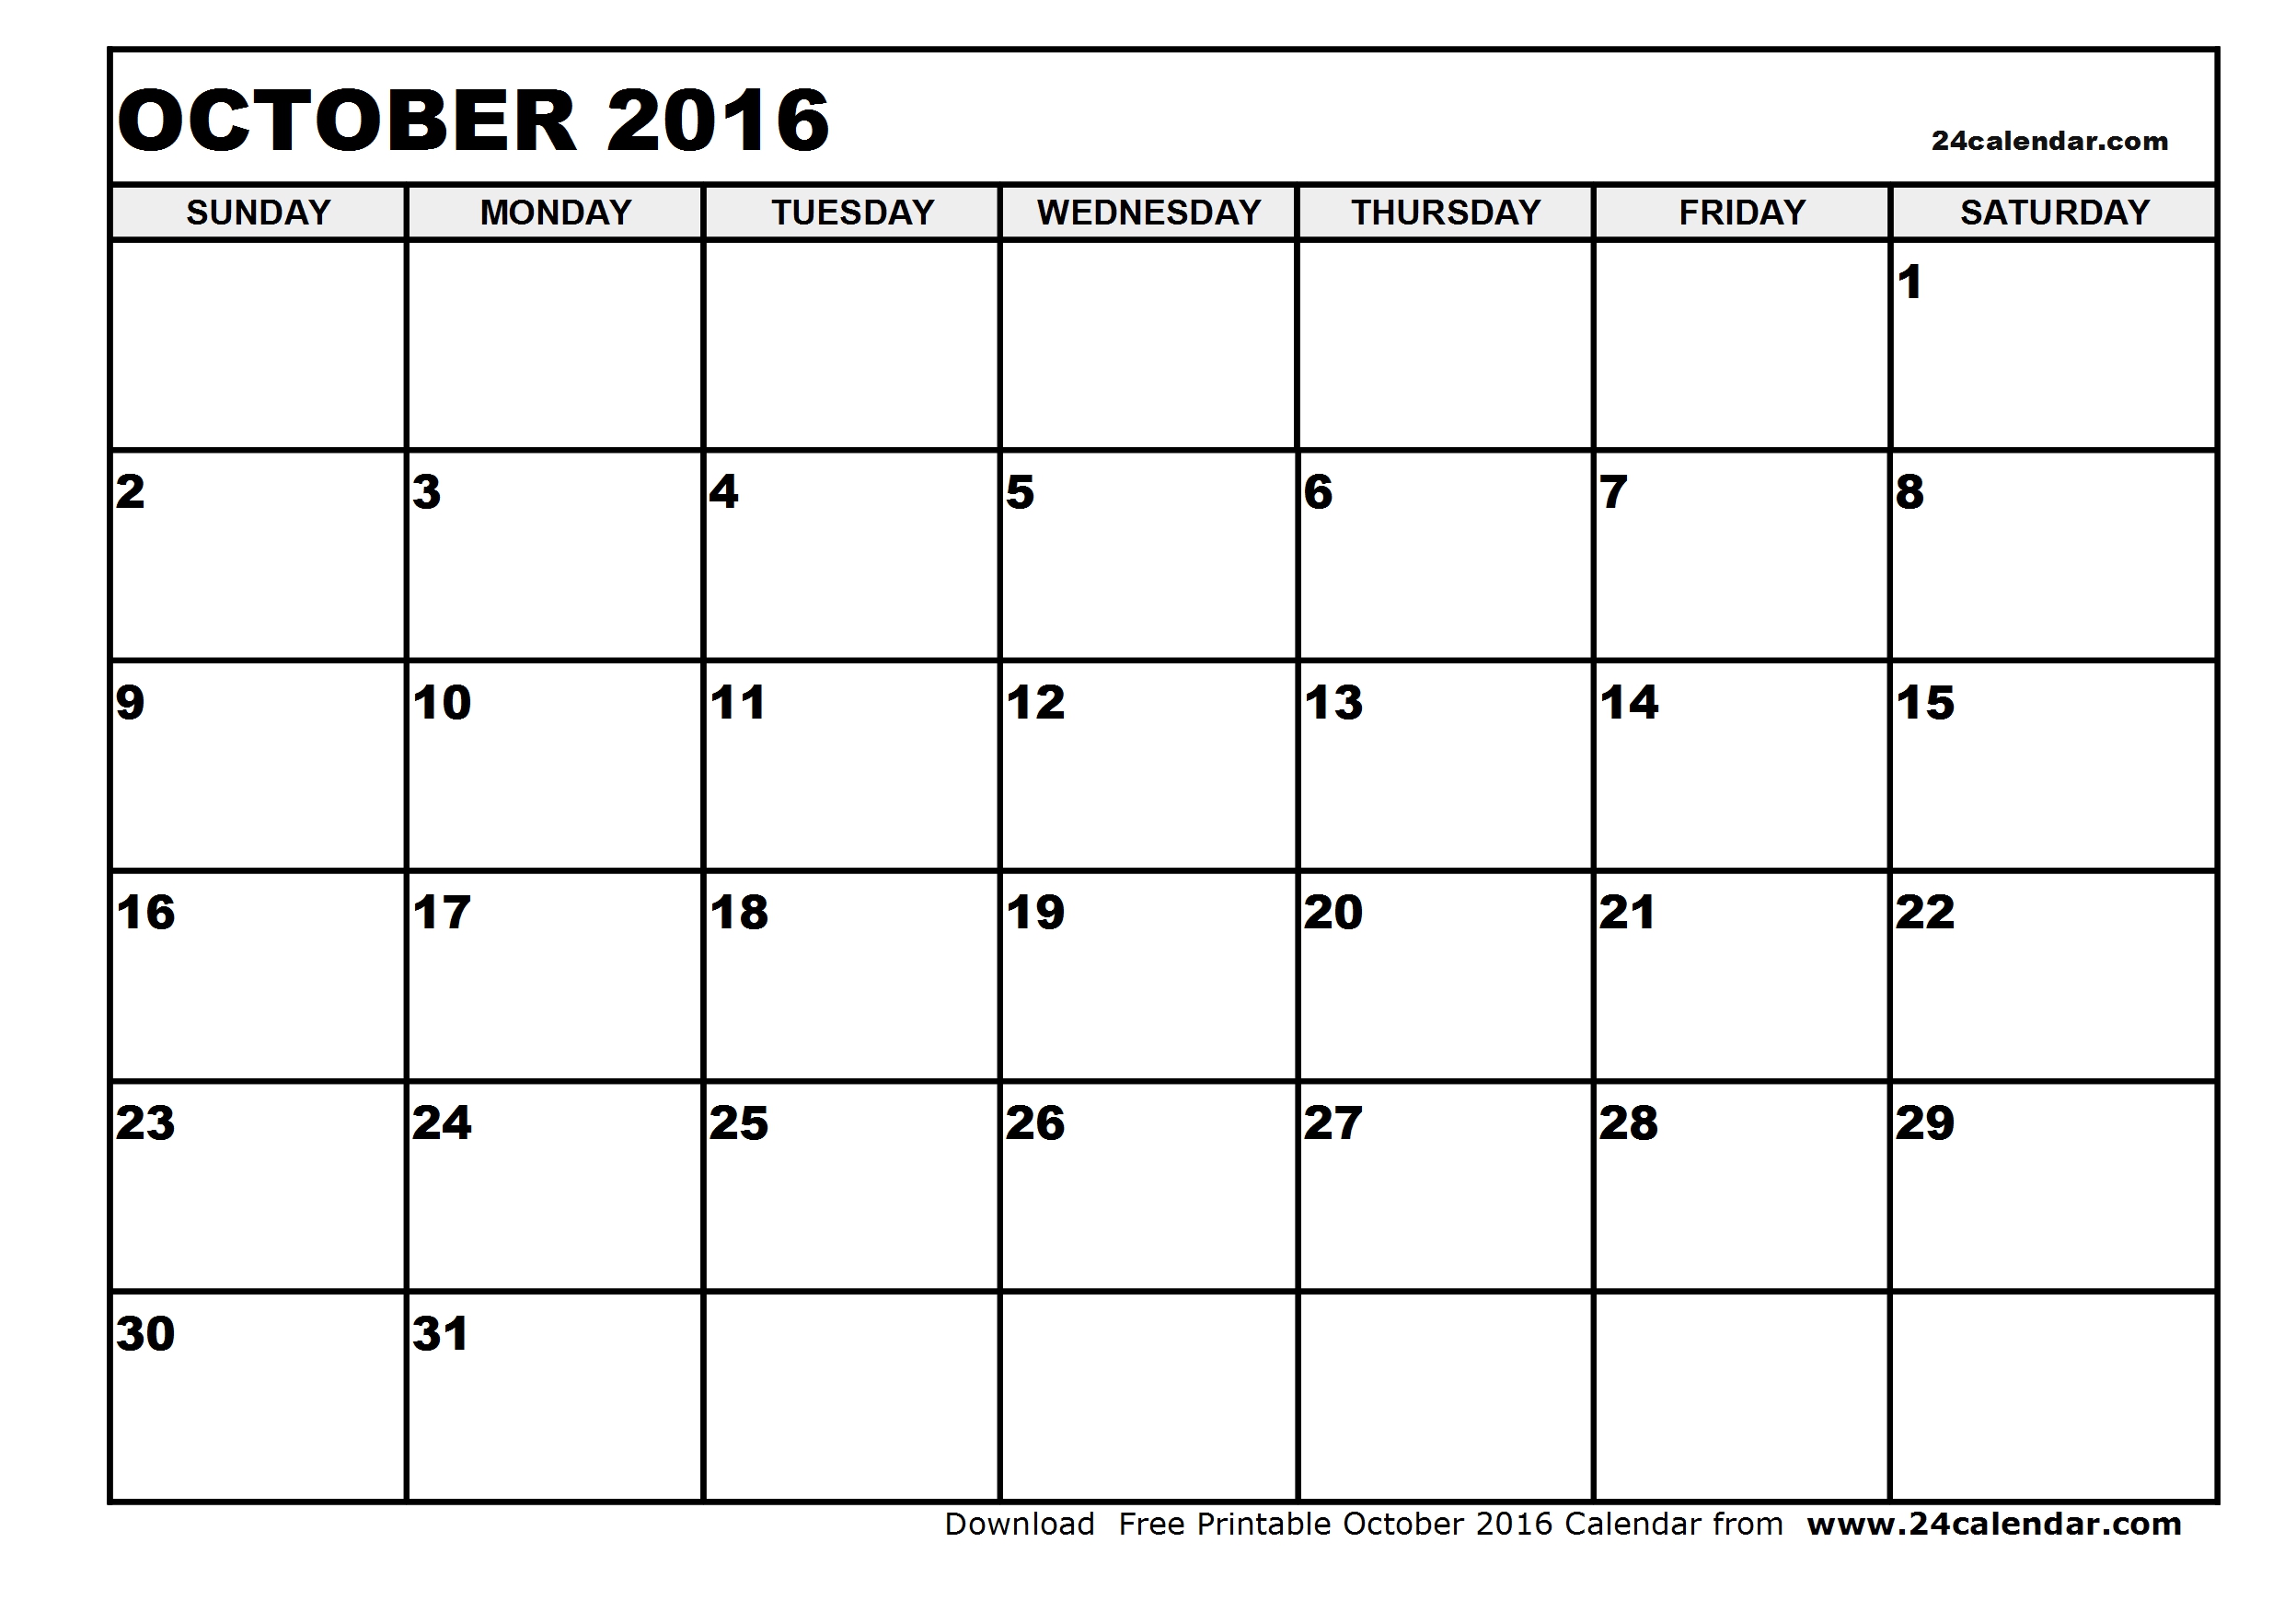 29 Images of October 2016 Calendar Template | leseriail.com